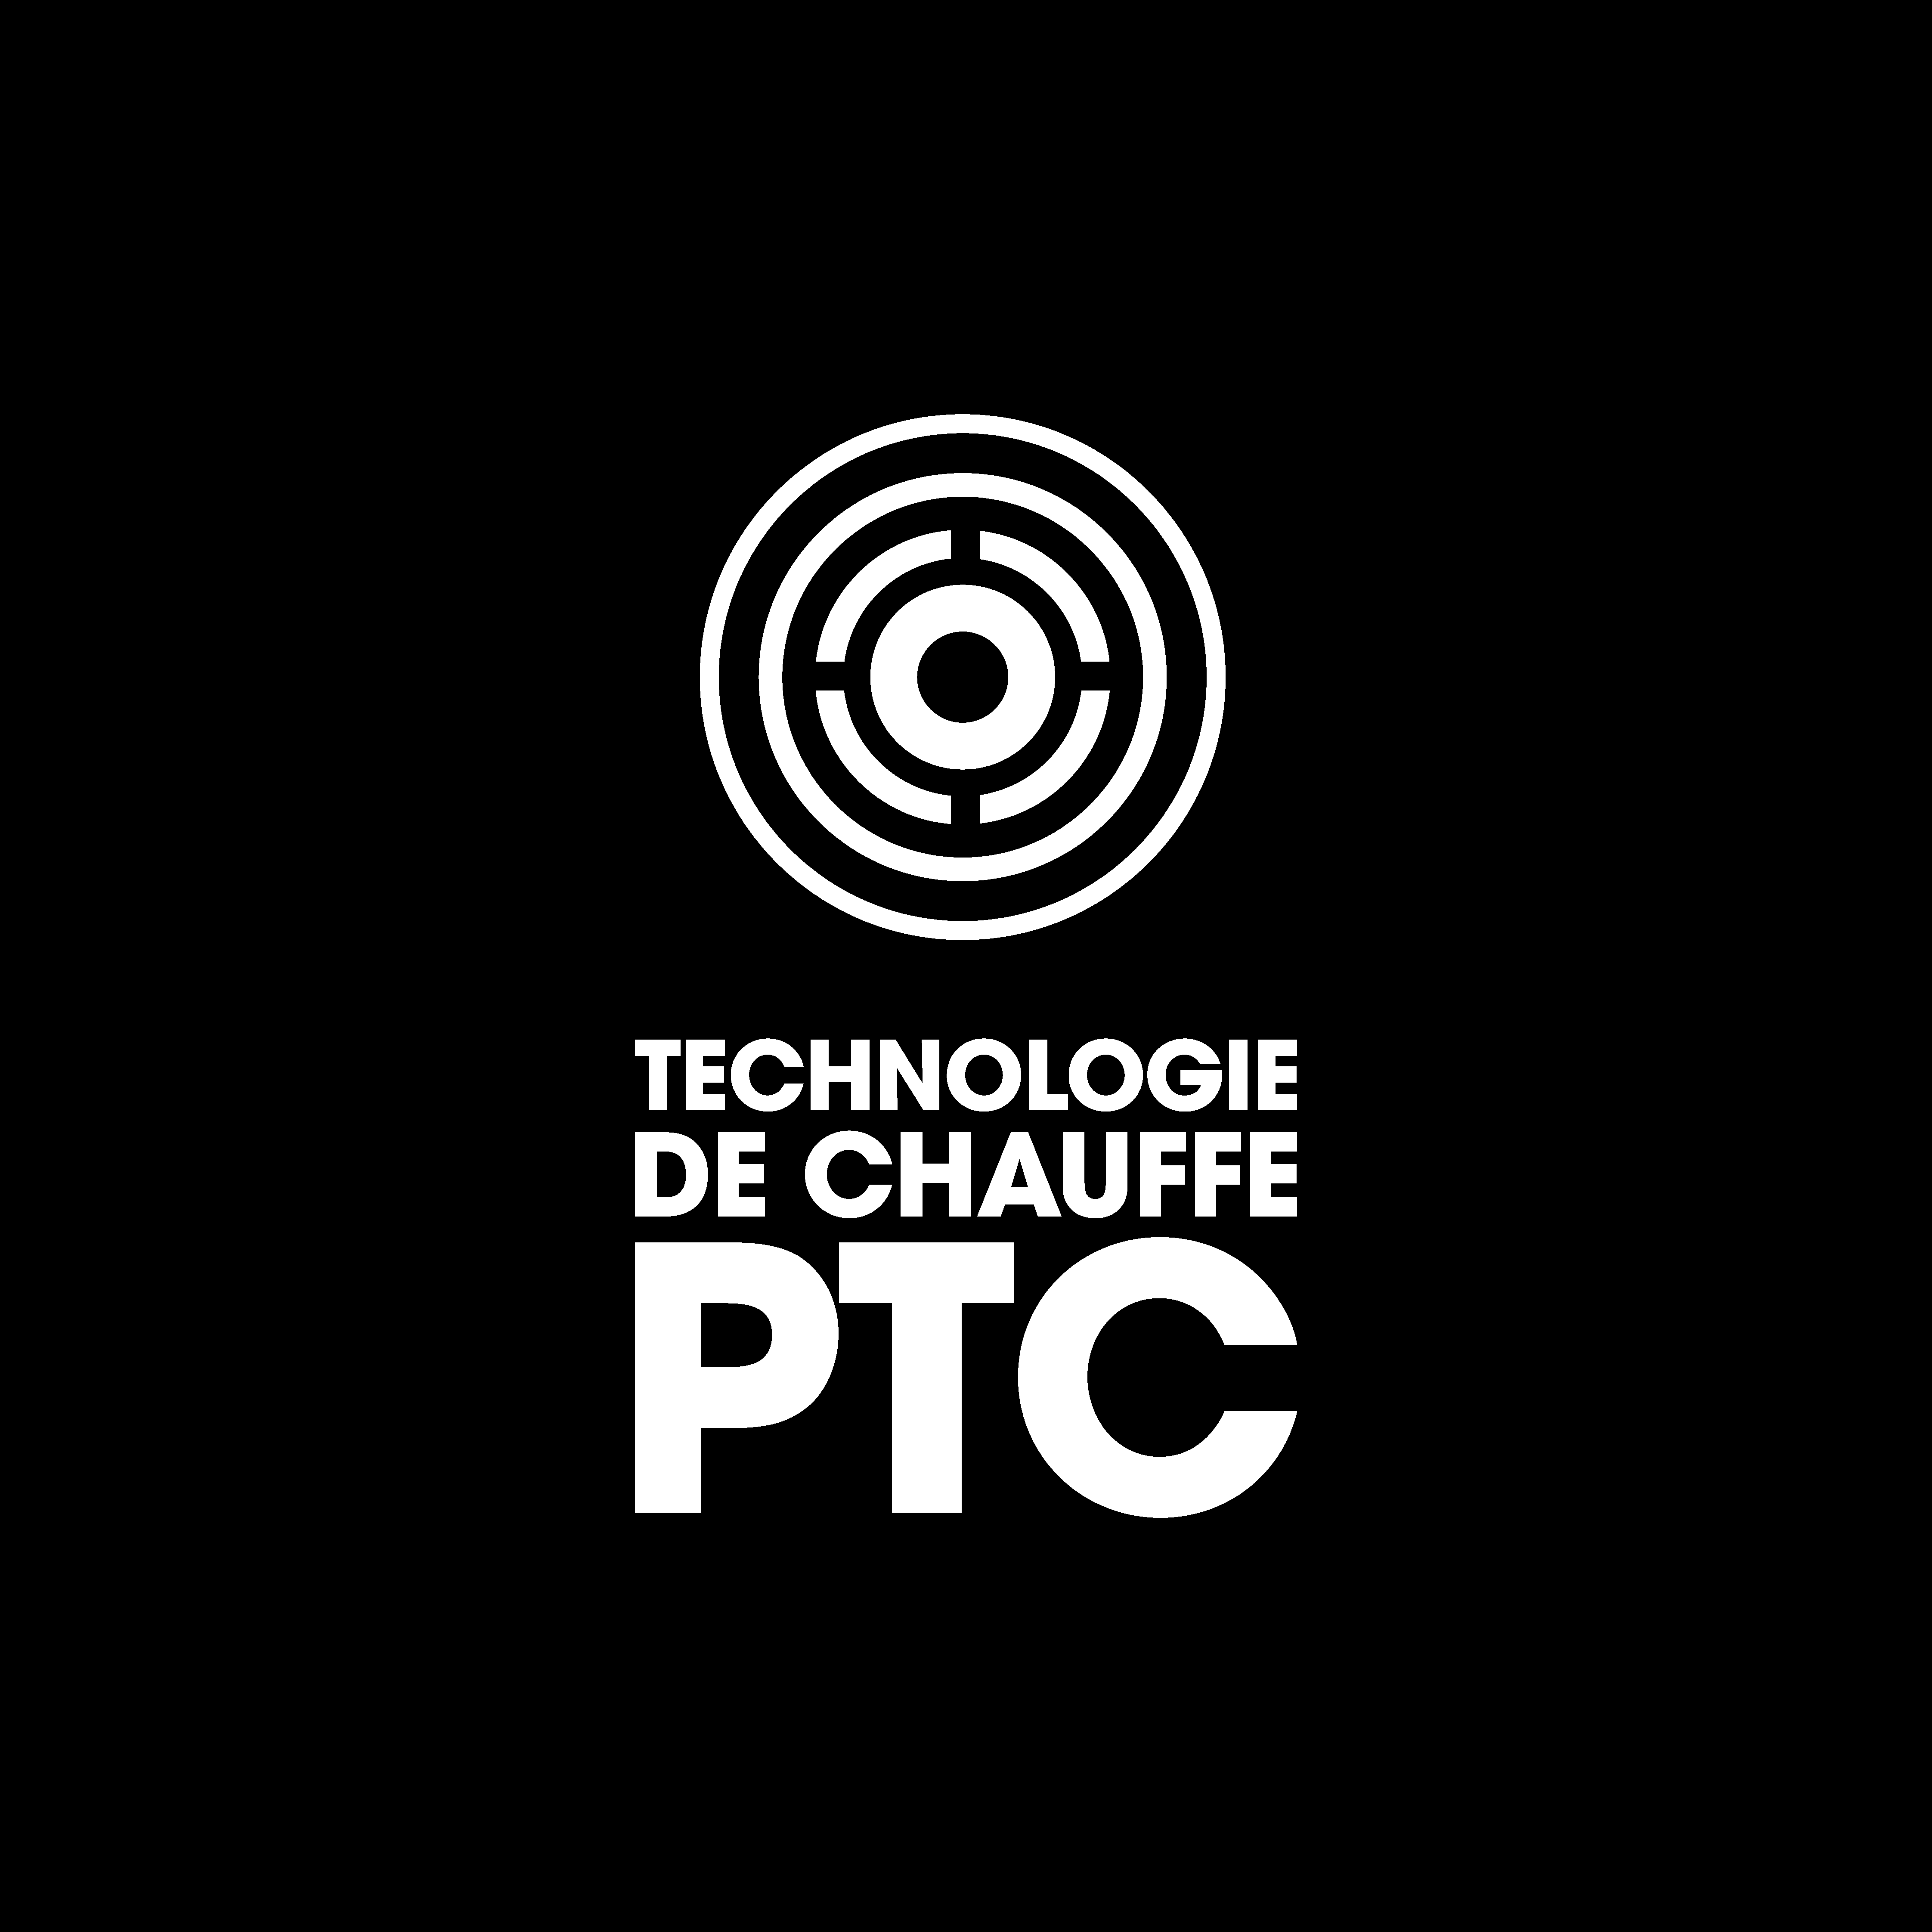 Technologie de chauffe PTC